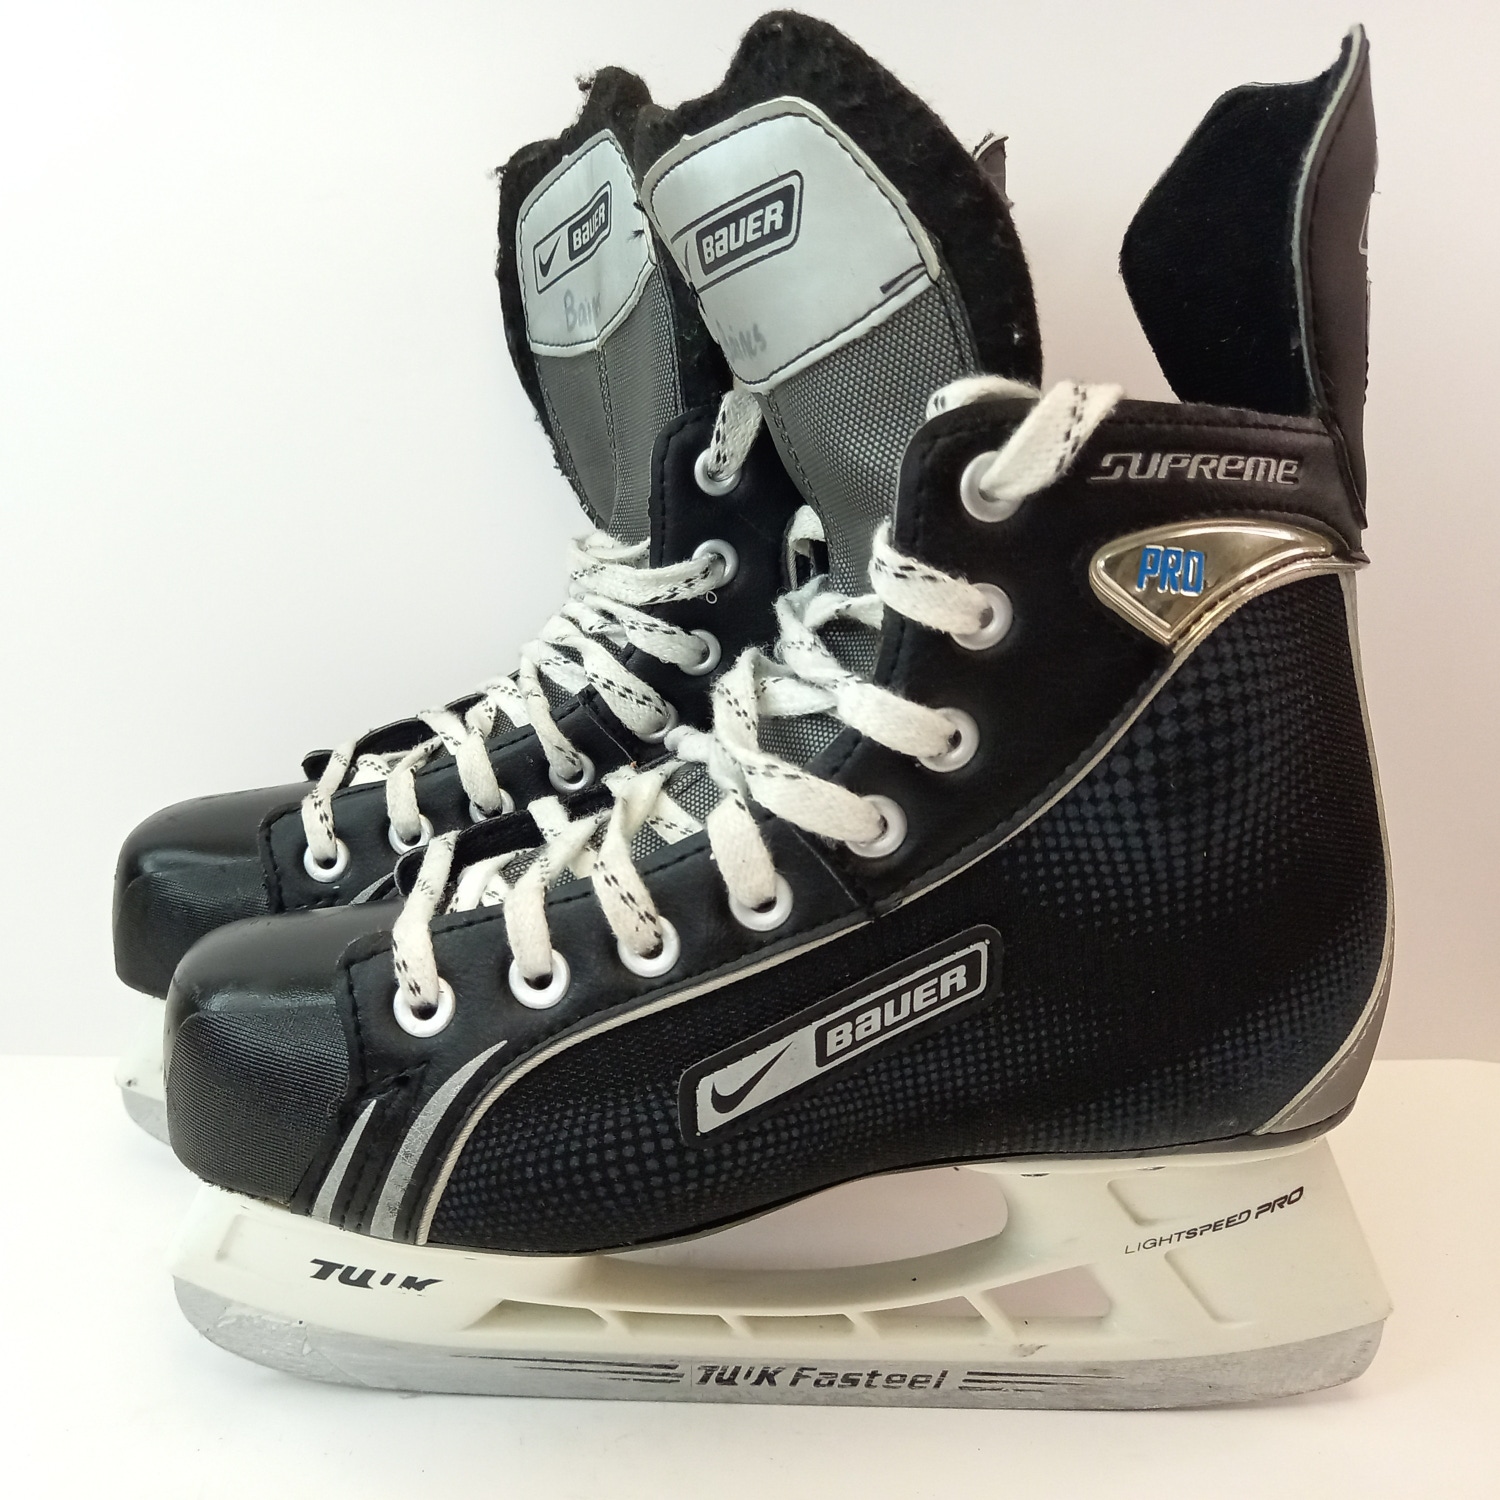 Intermediate Bauer Supreme Pro Hockey Skates Size 5 Skate (Men 6 US Shoe Size)